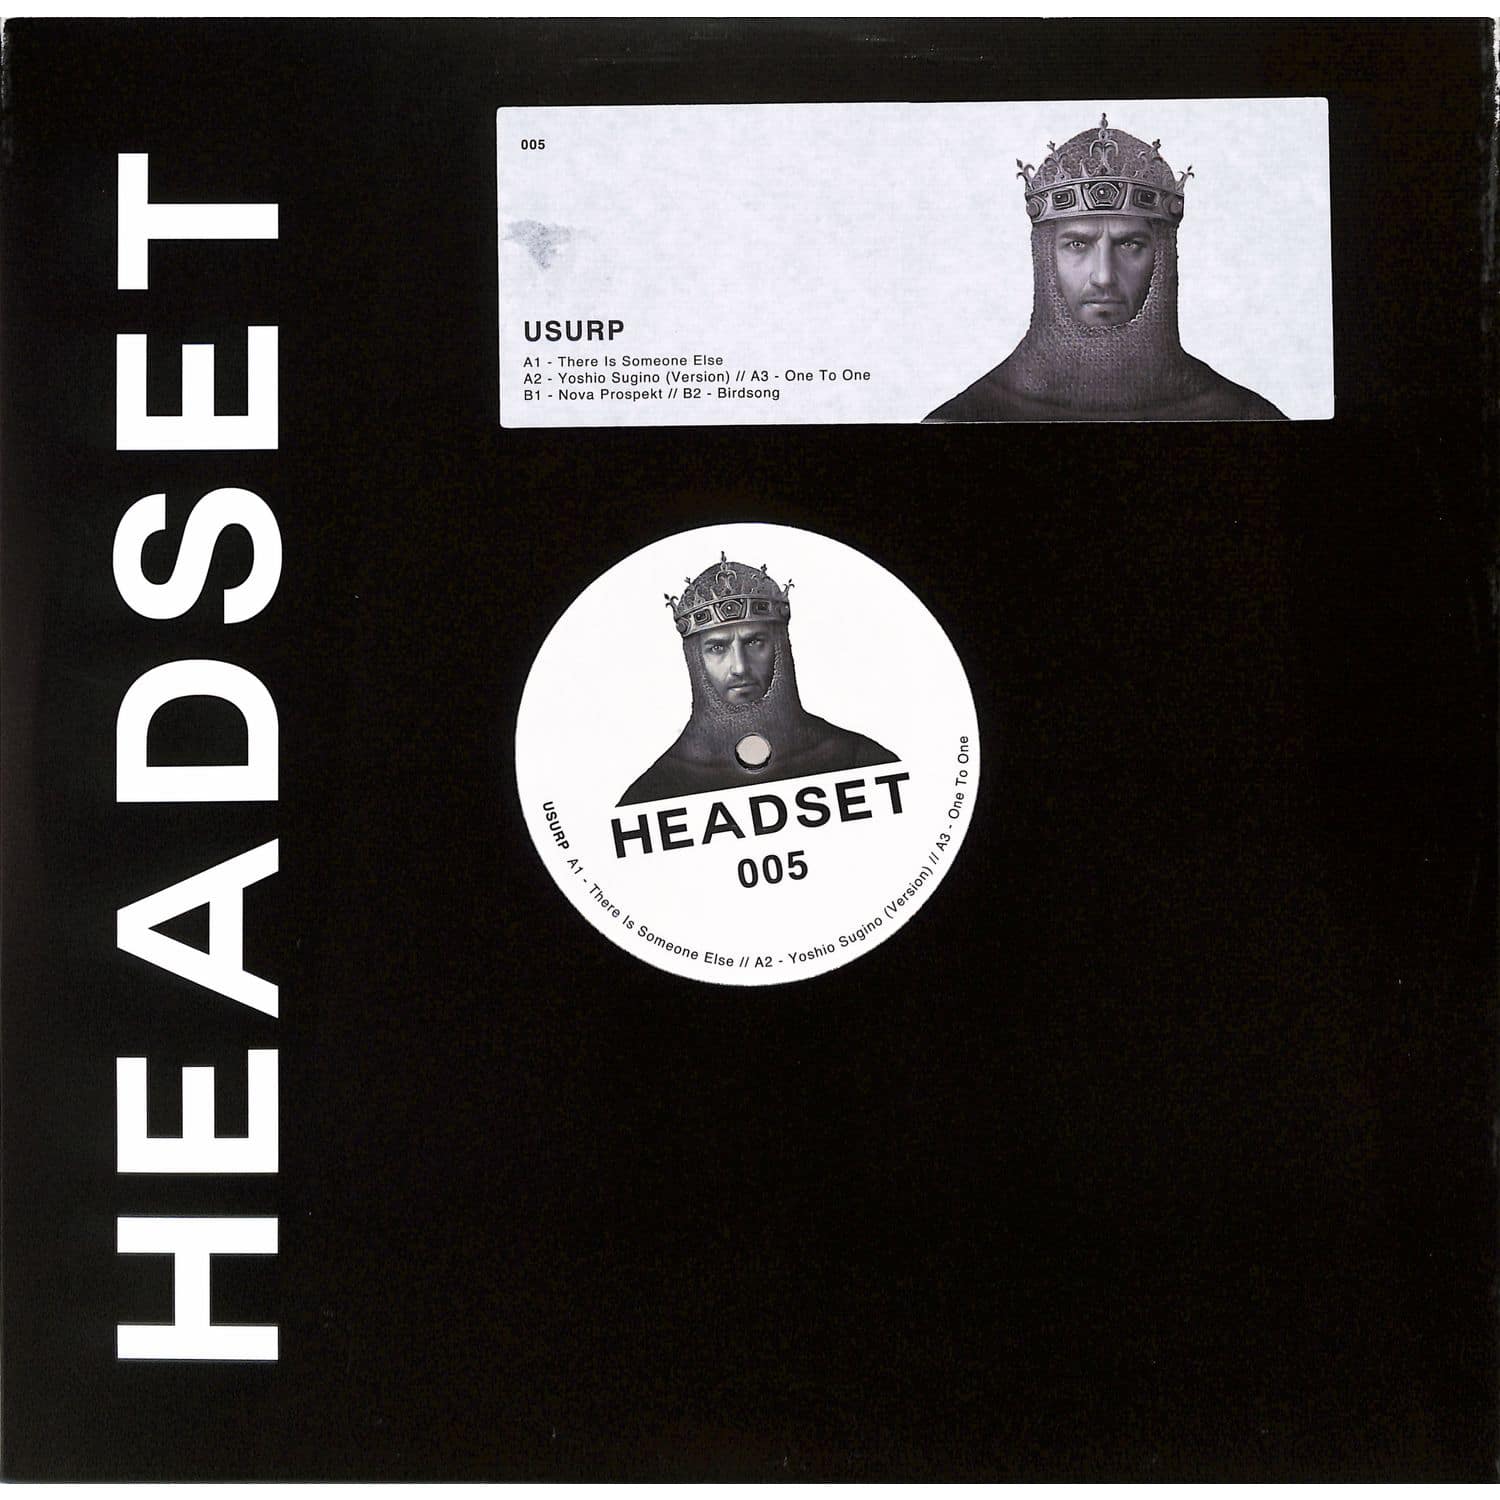 Usurp - HEADSET005